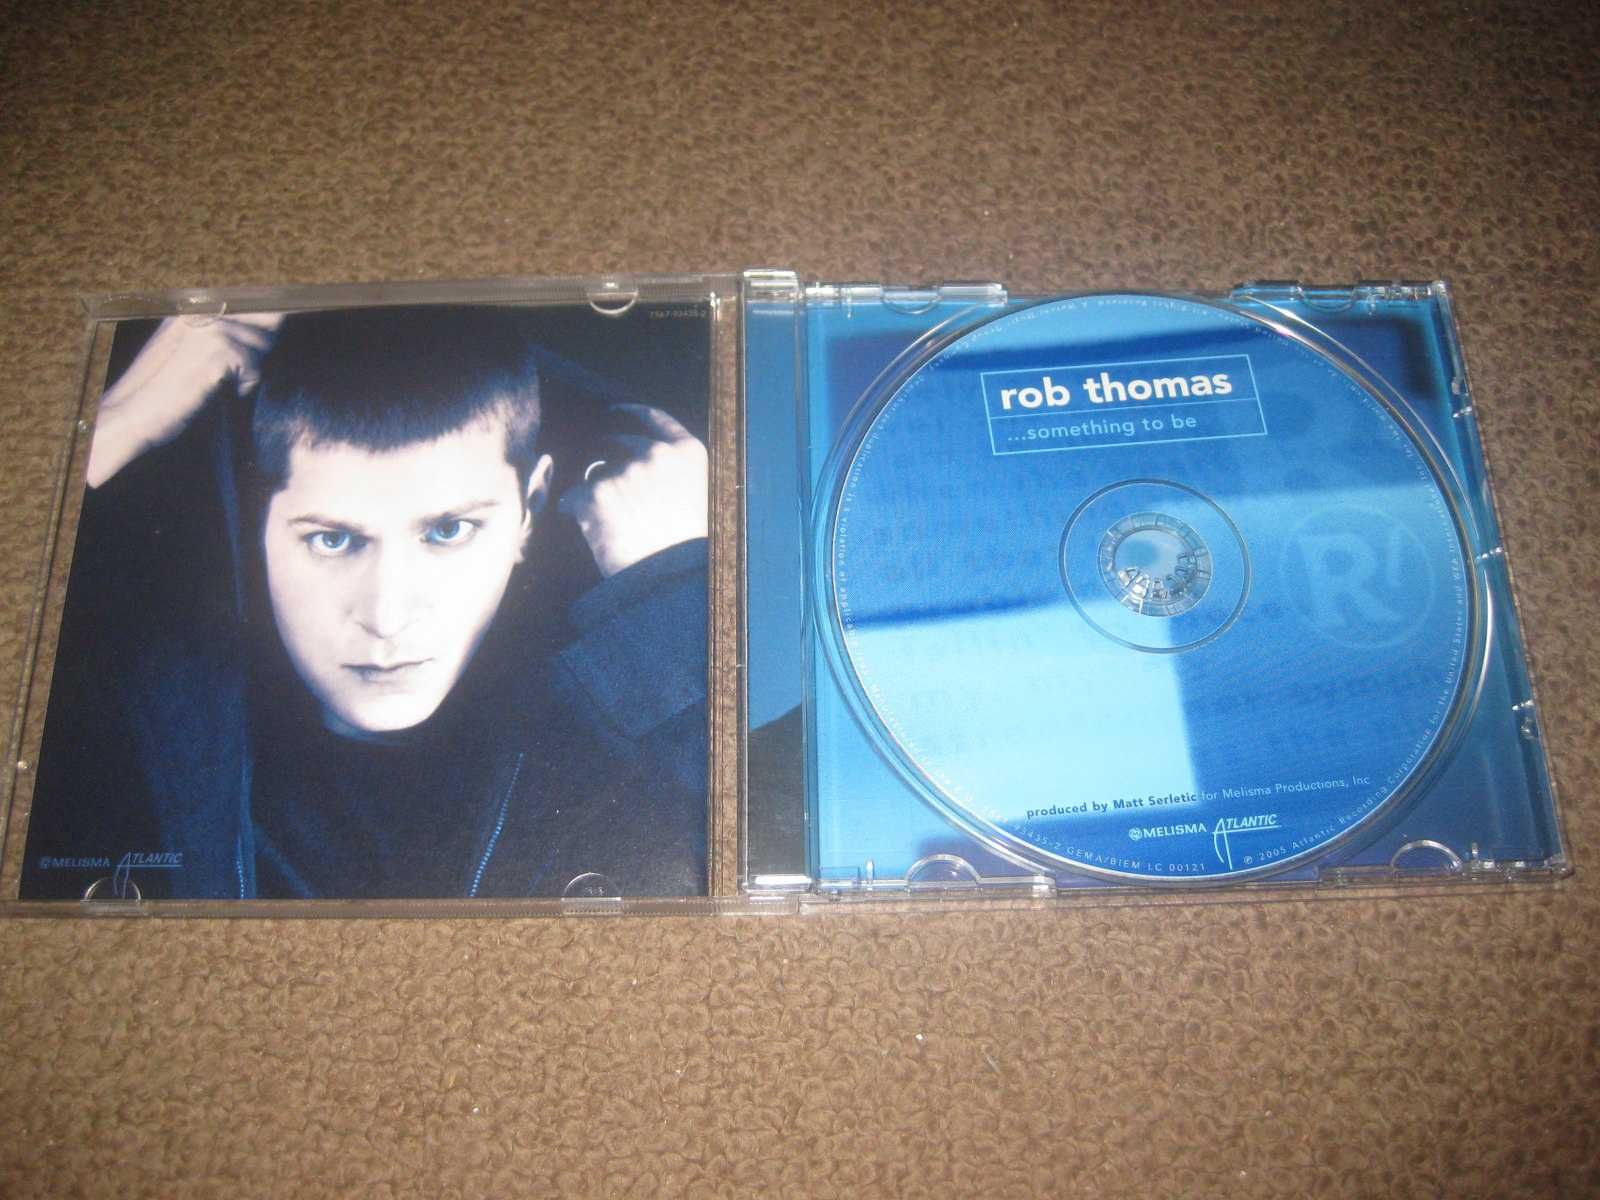 CD do Rob Thomas "...Something to Be" Portes Grátis!